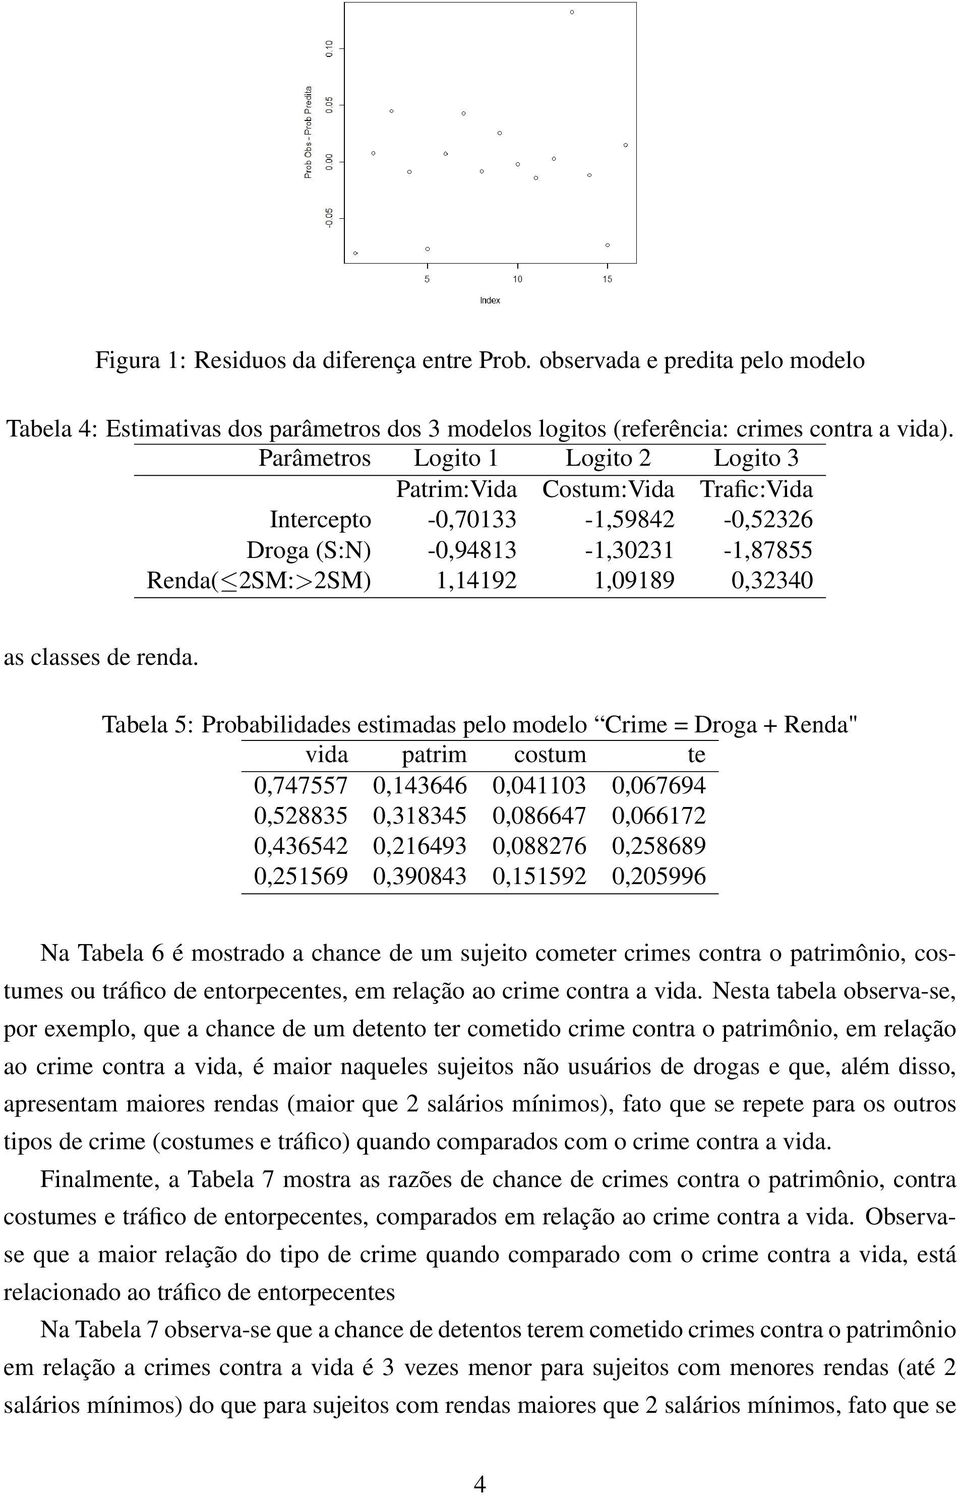 Tabela 5: Probabilidades estimadas pelo modelo Crime = Droga + Renda" vida patrim costum te 0,747557 0,143646 0,041103 0,067694 0,528835 0,318345 0,086647 0,066172 0,436542 0,216493 0,088276 0,258689